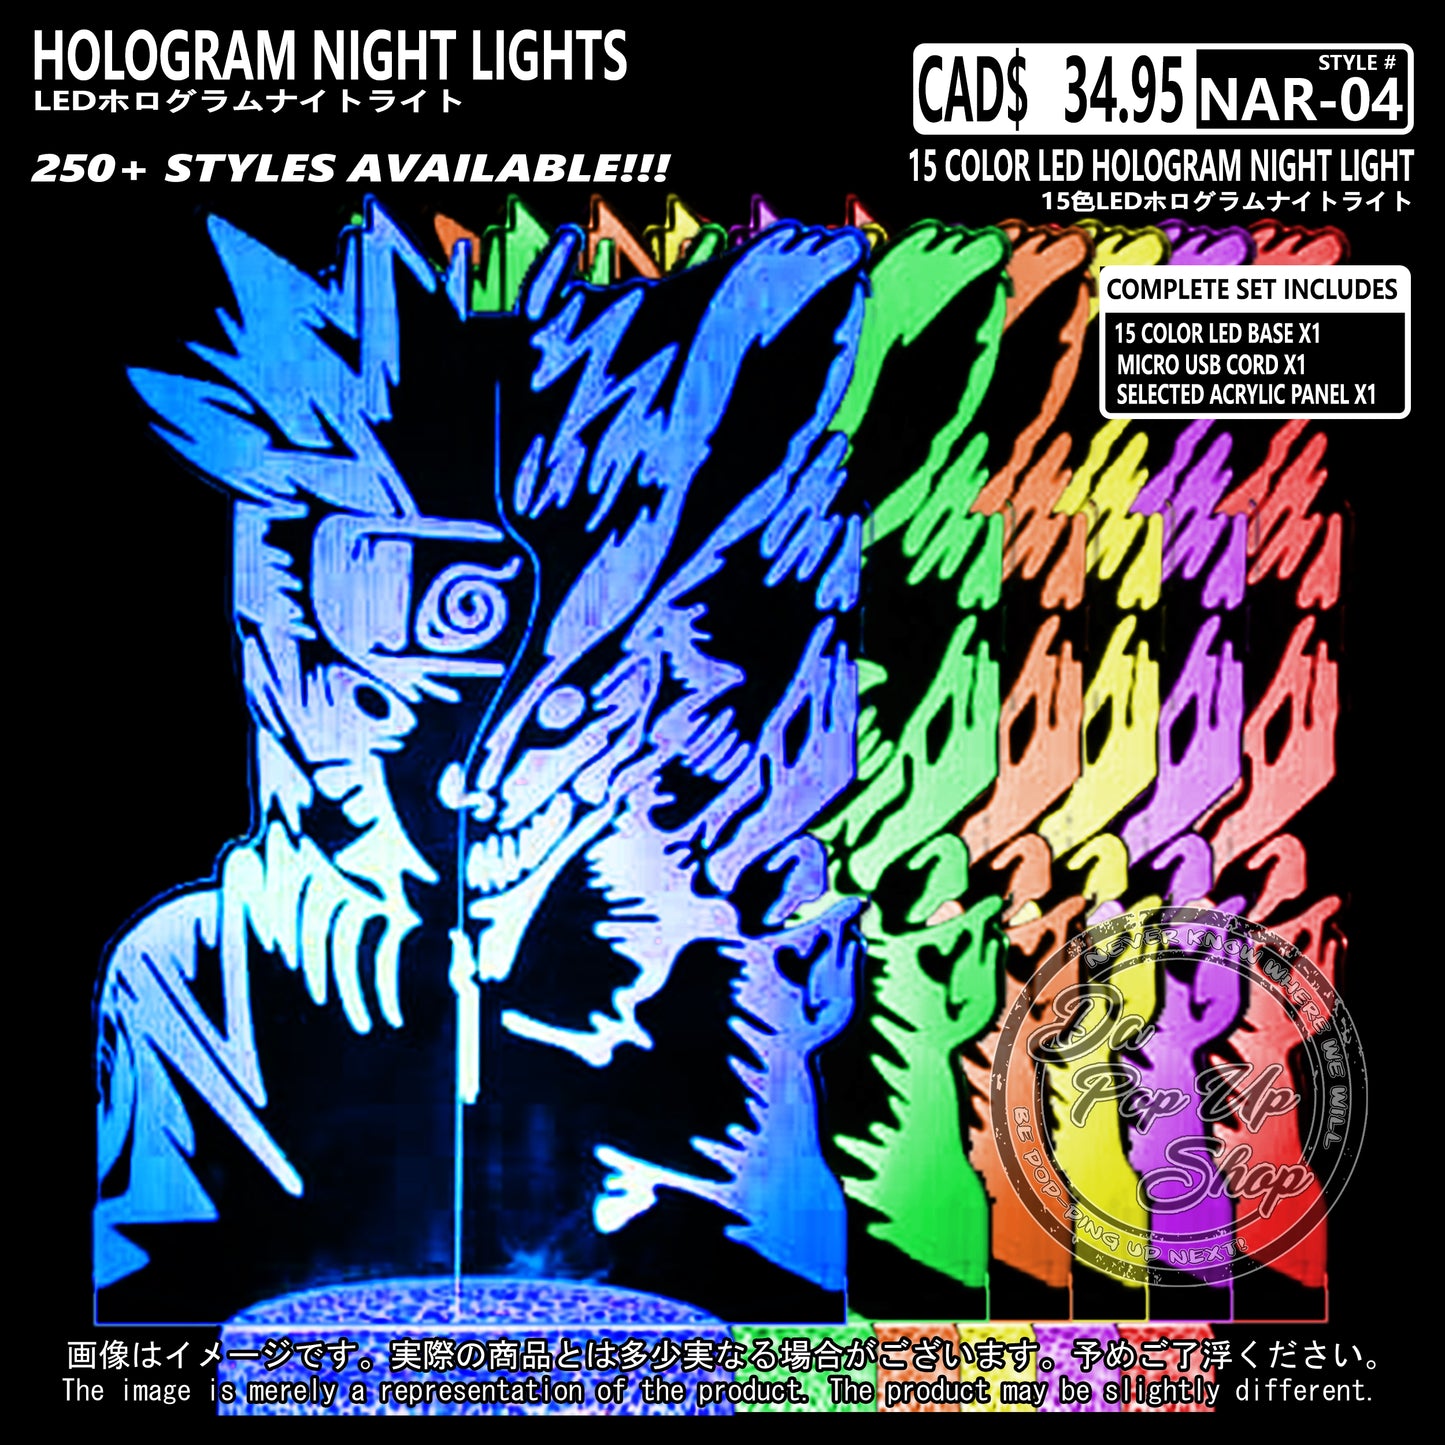 (NAR-04) Naruto Hologram LED Night Light